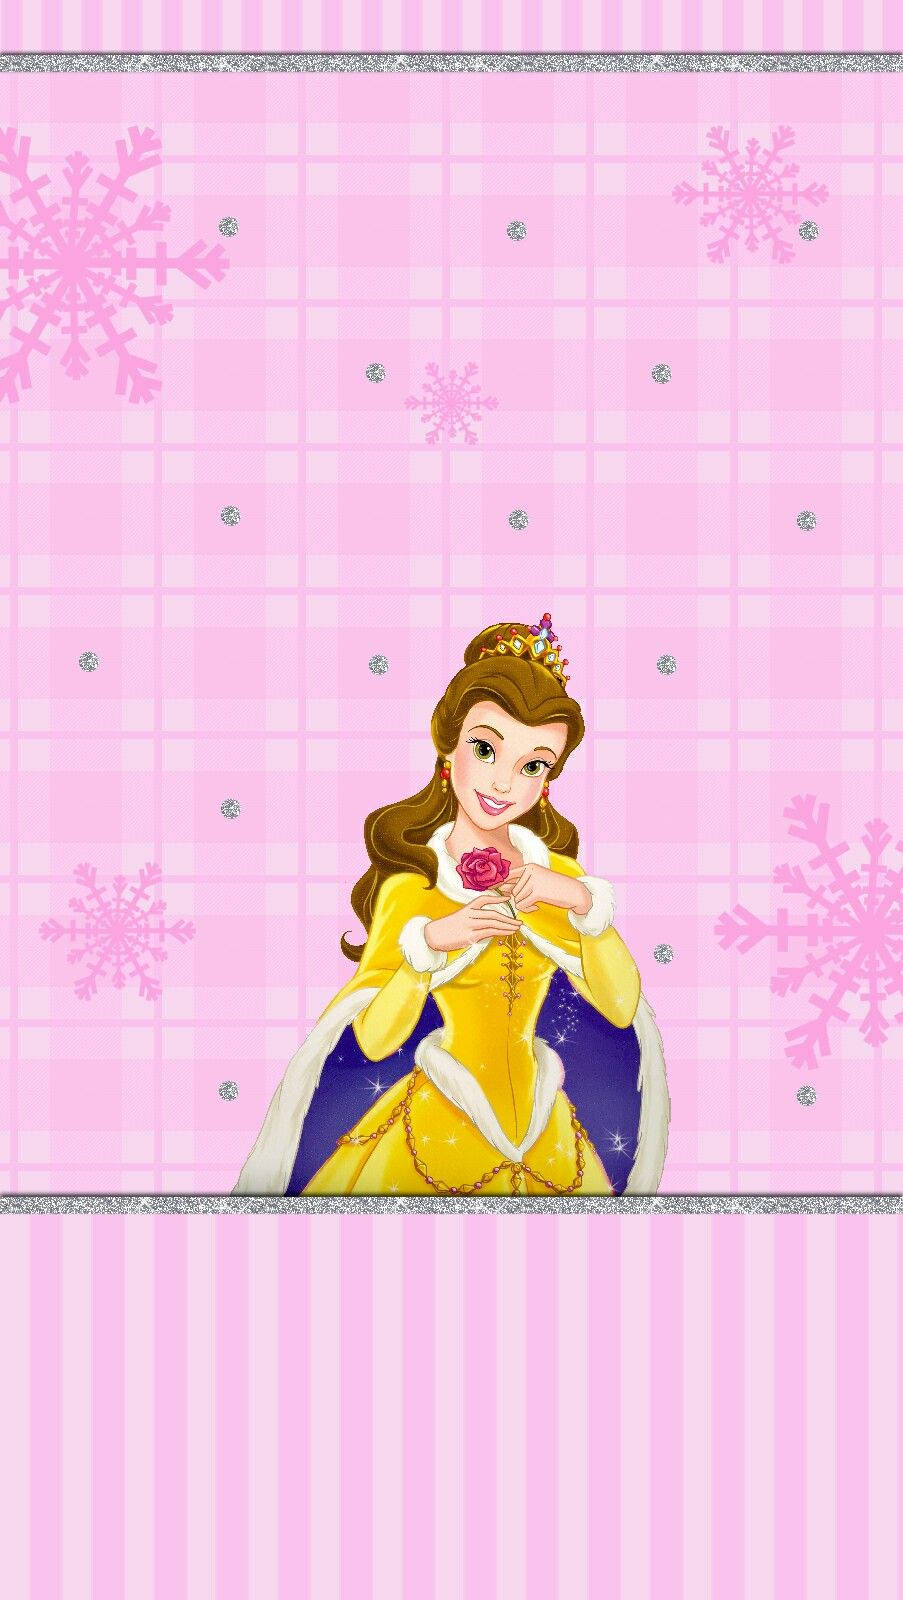 Disney Christmas iPhone Belle's Golden Ball Gown Wallpaper